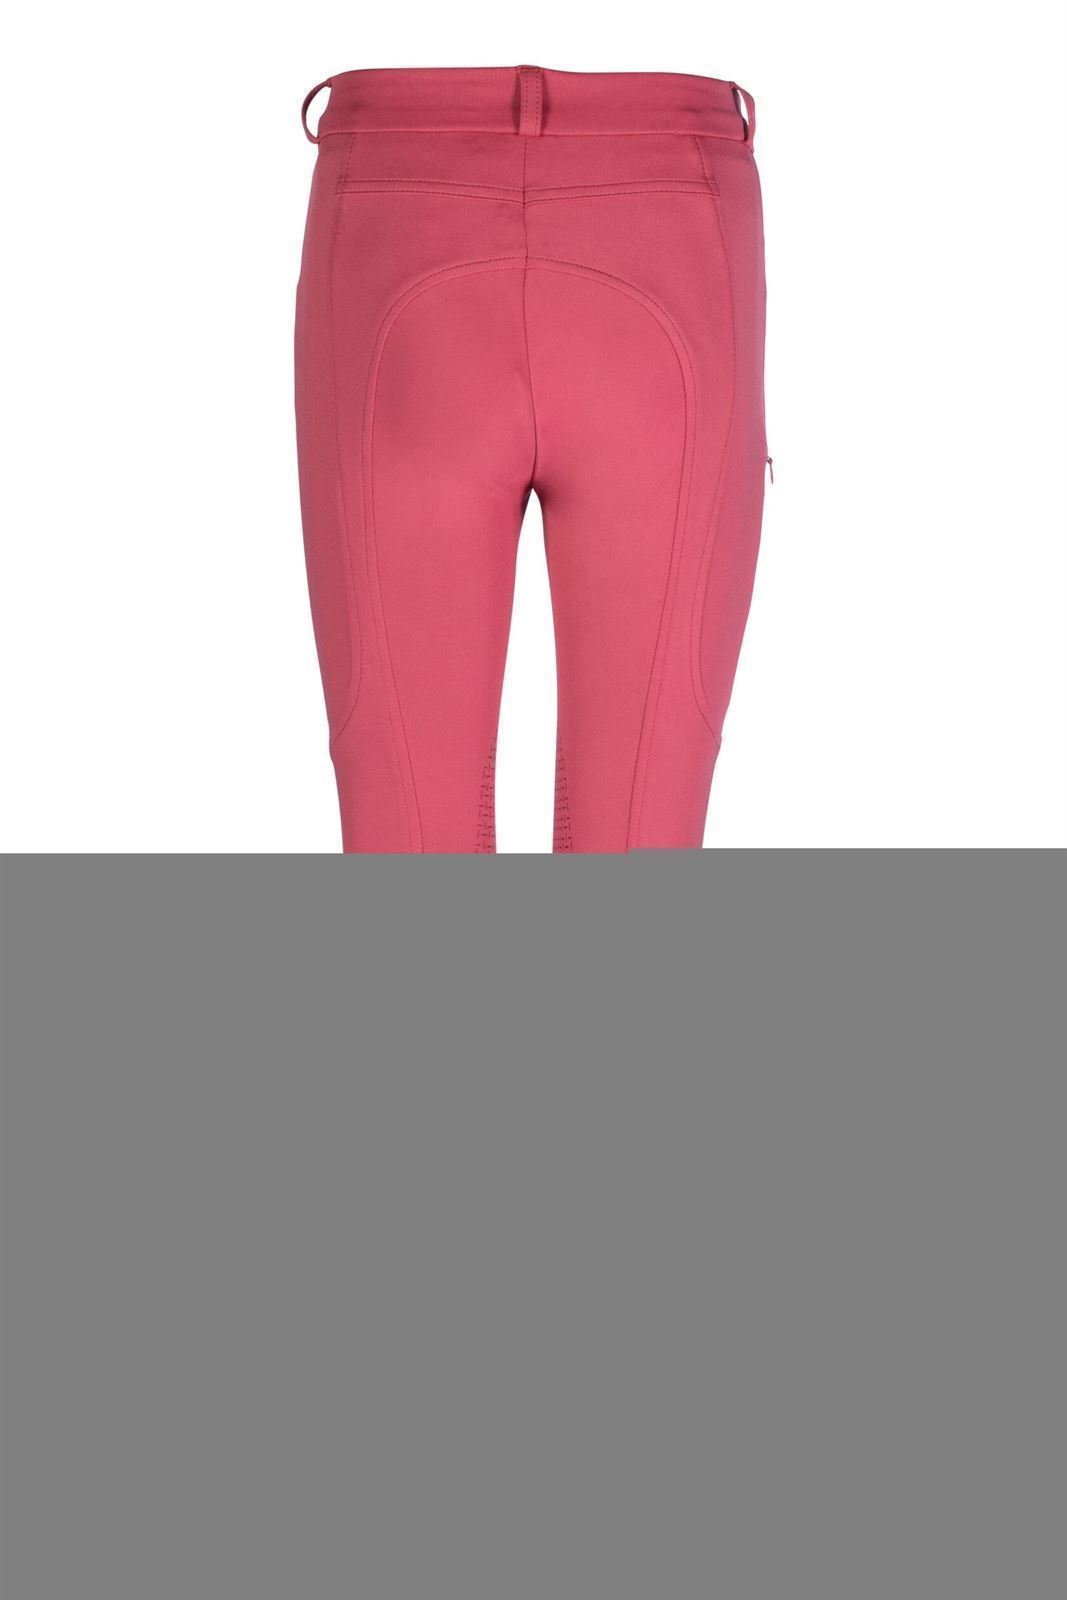 Pantalón unisex HKM Sports Equipment Anni grip rodilla, color frambuesa - Imagen 5